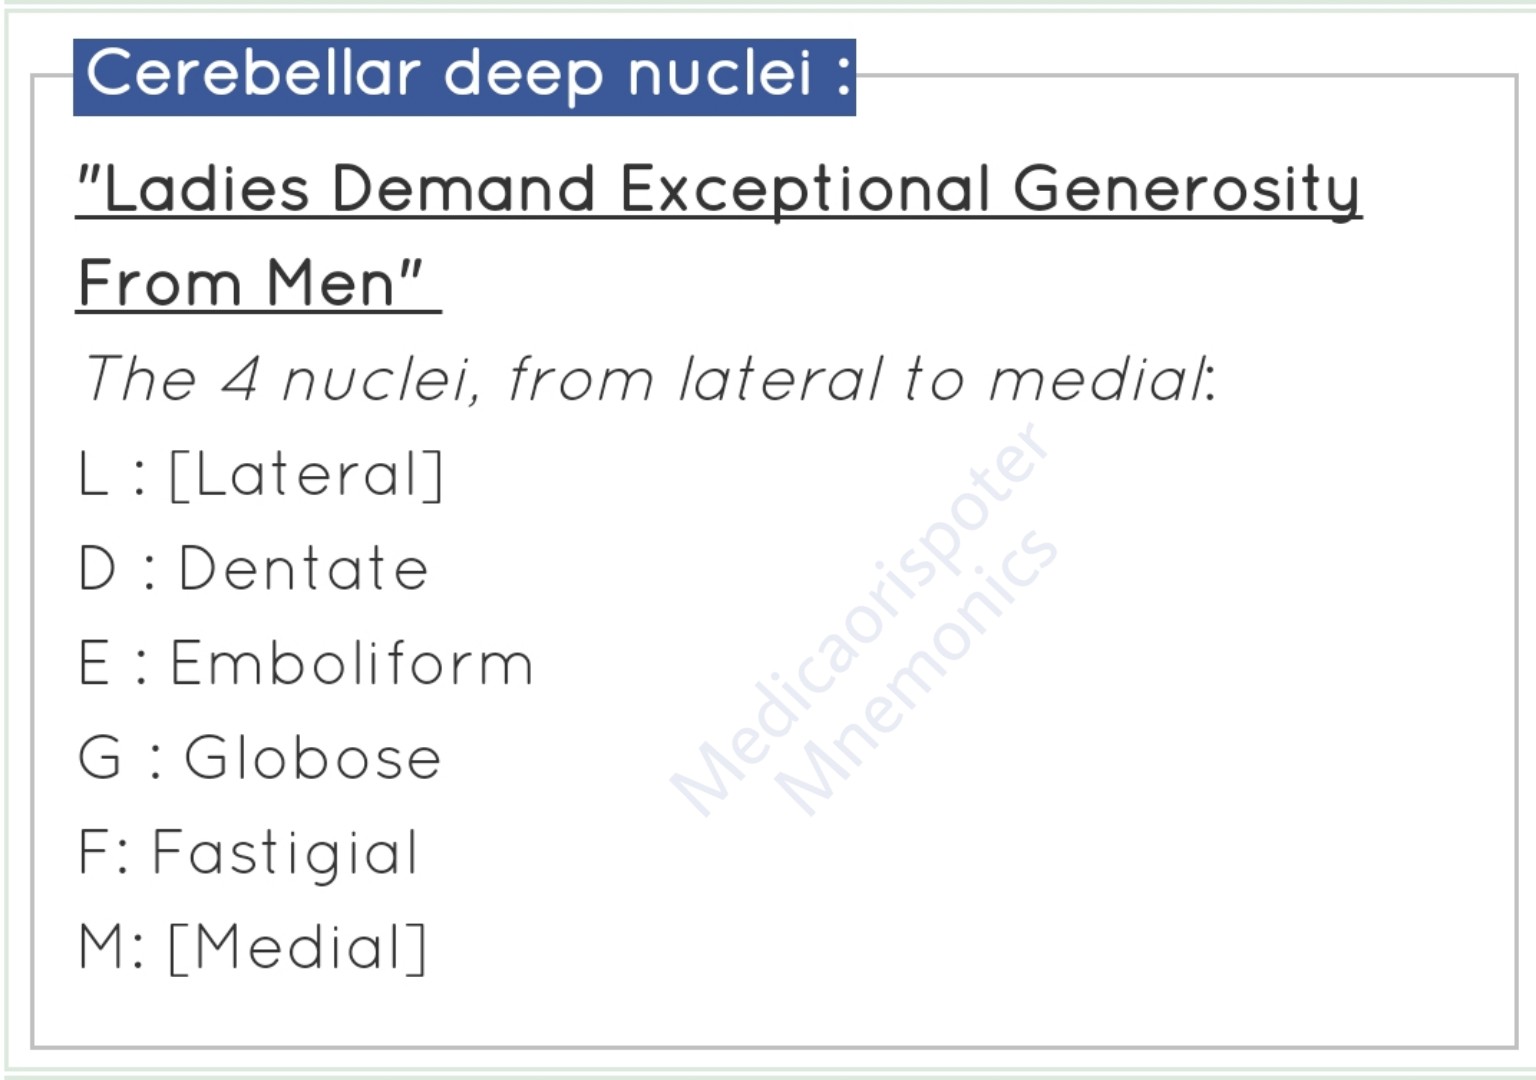 Cerebellar Deep Nuclei